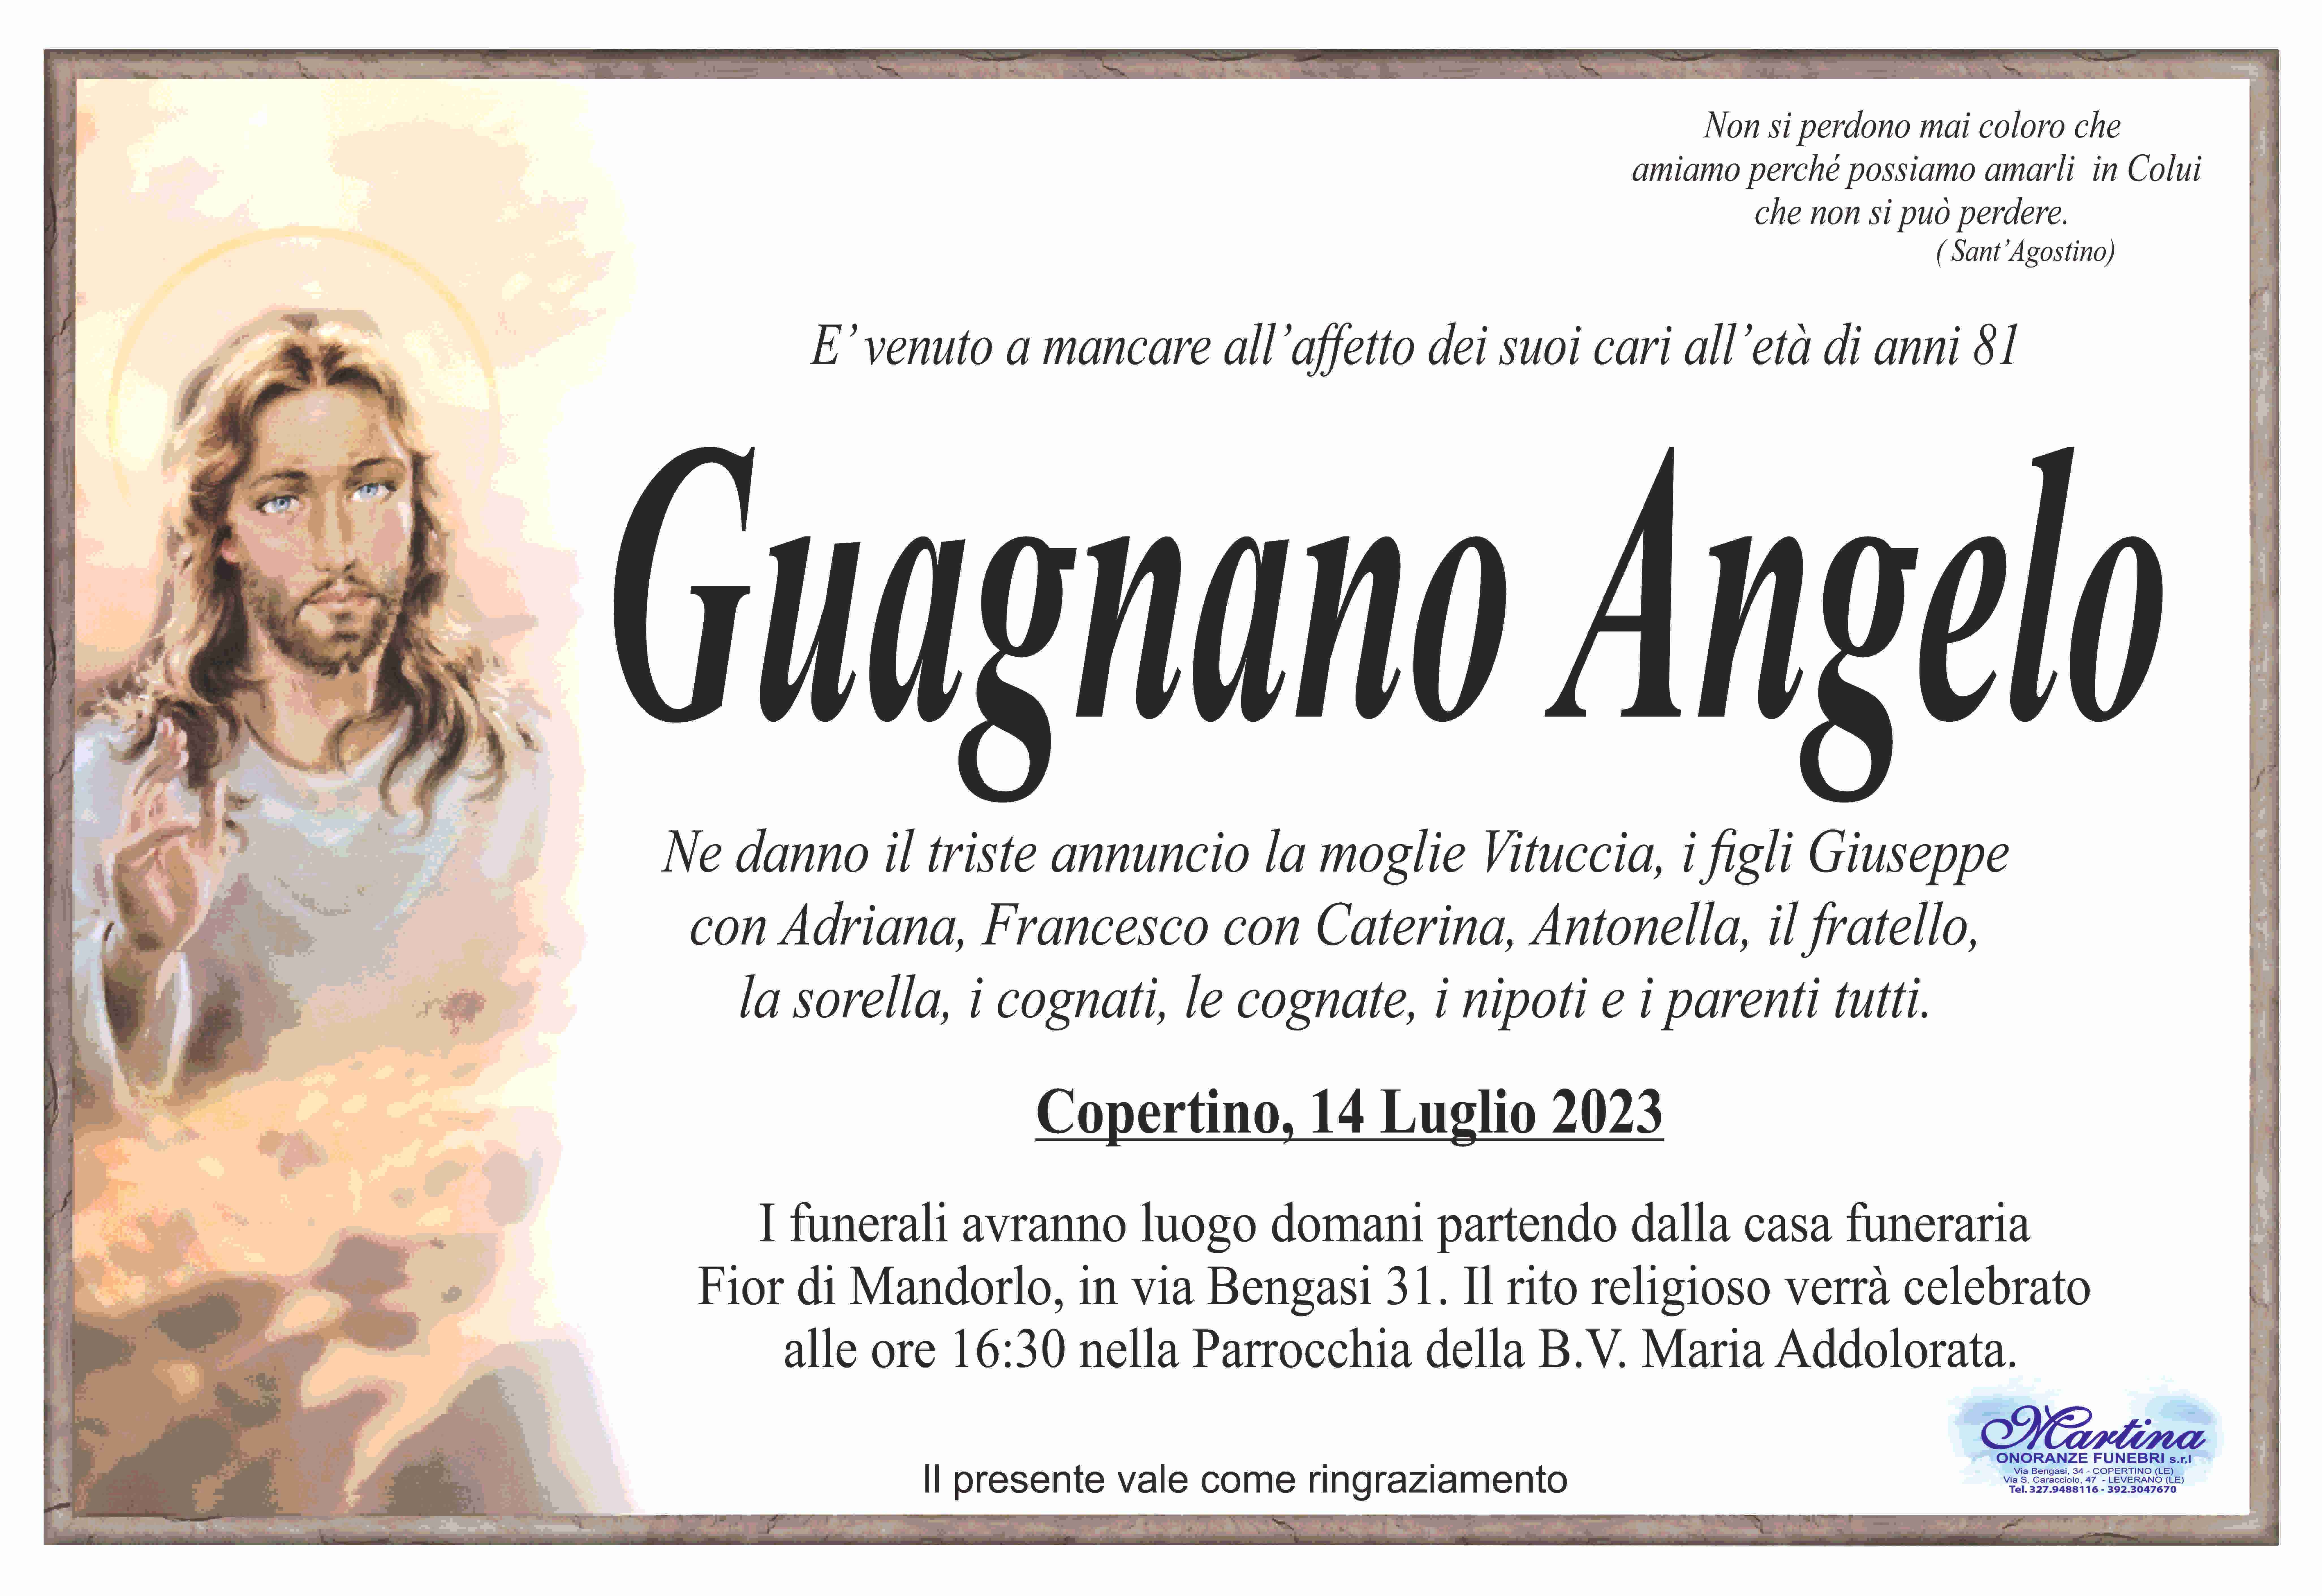 Angelo Guagnano